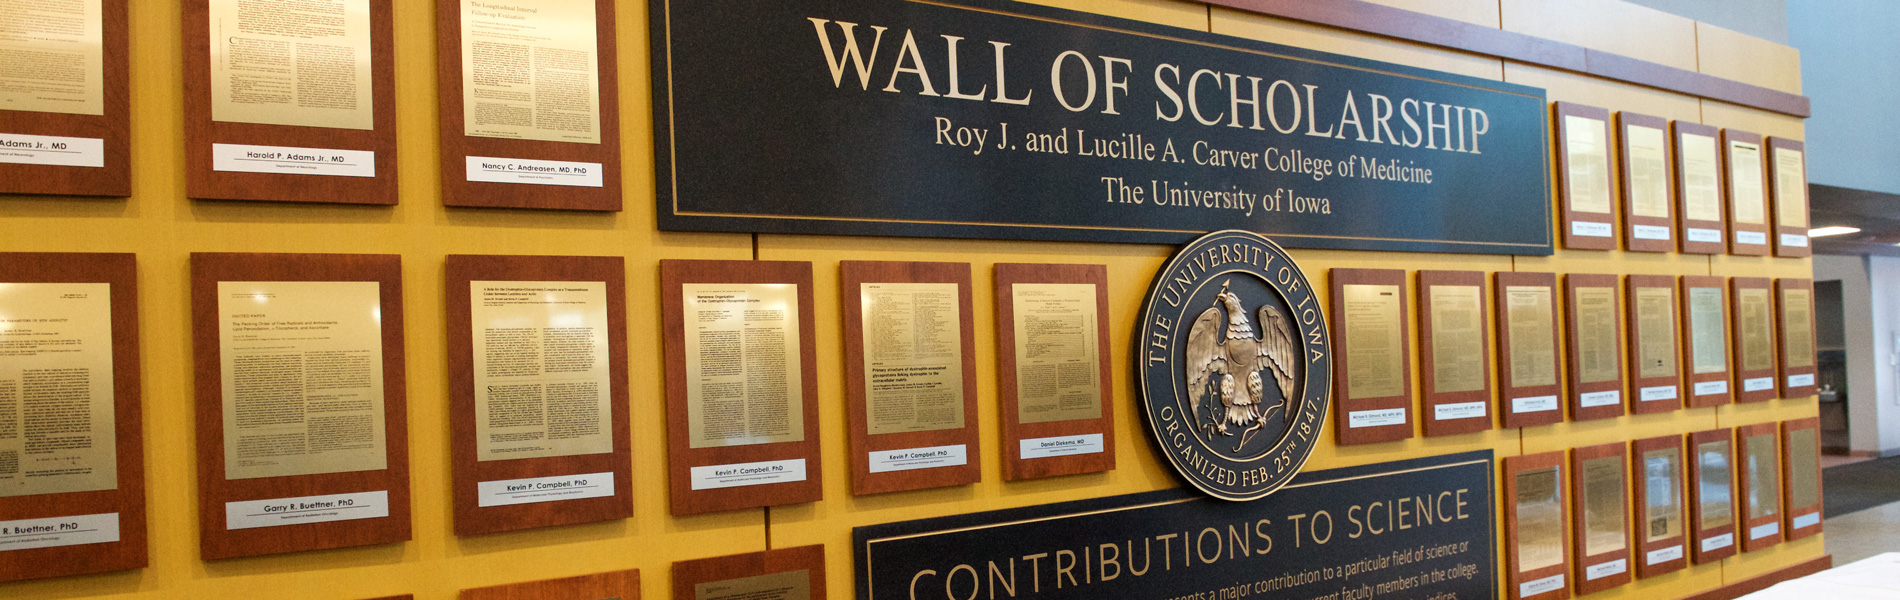 wall of scholarship